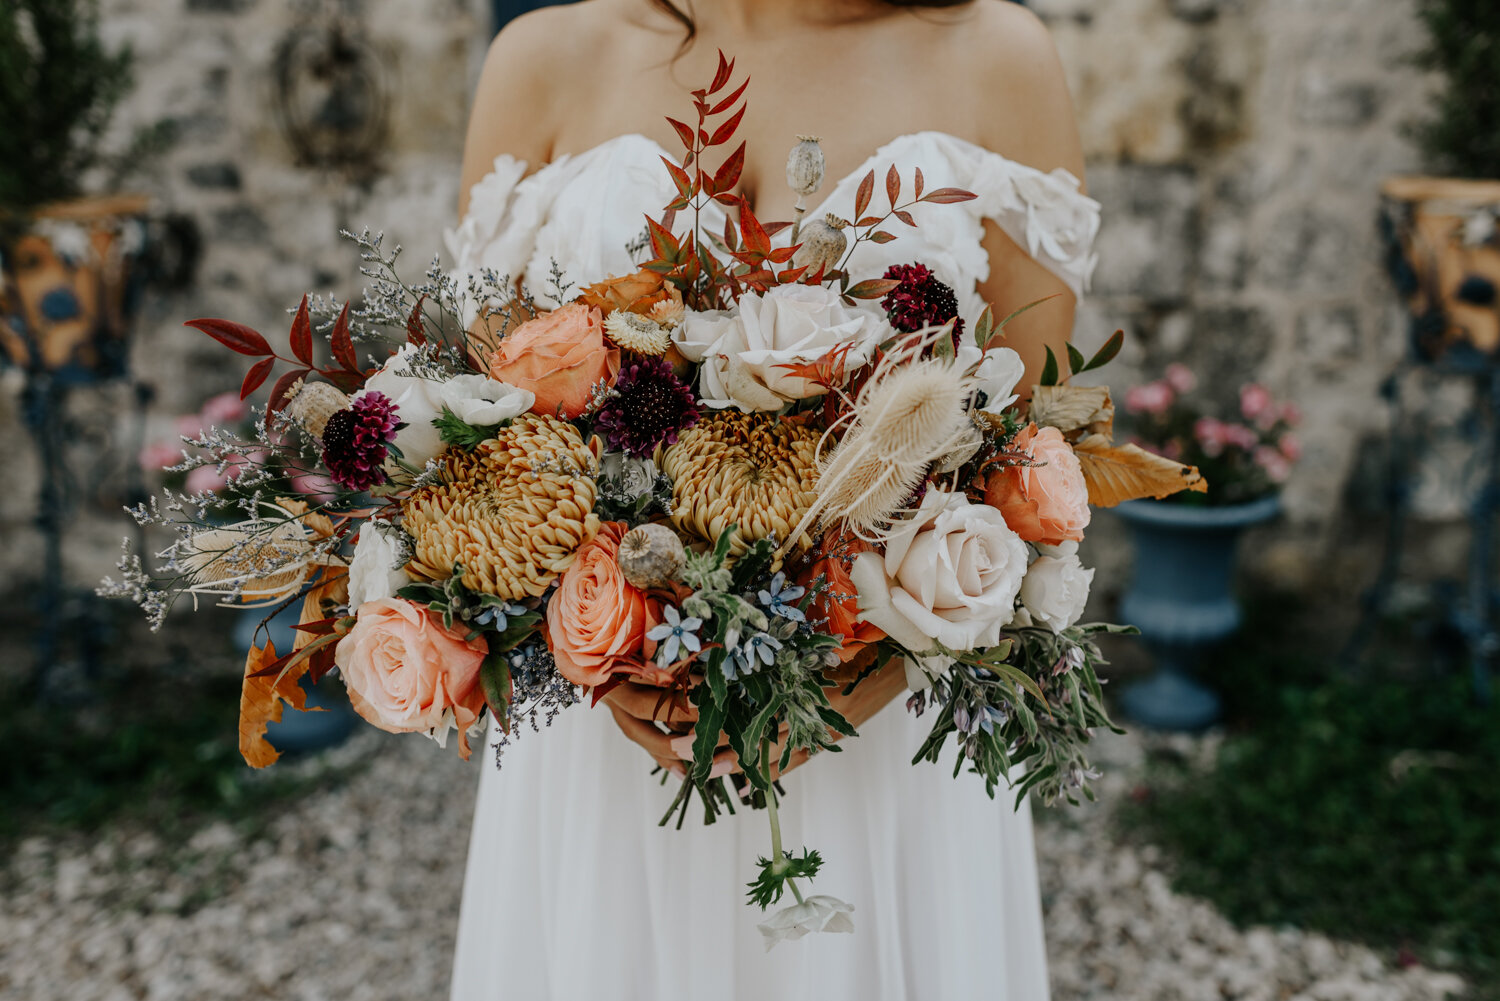 Austin, TX The perfect Elopement Wedding Bouquet